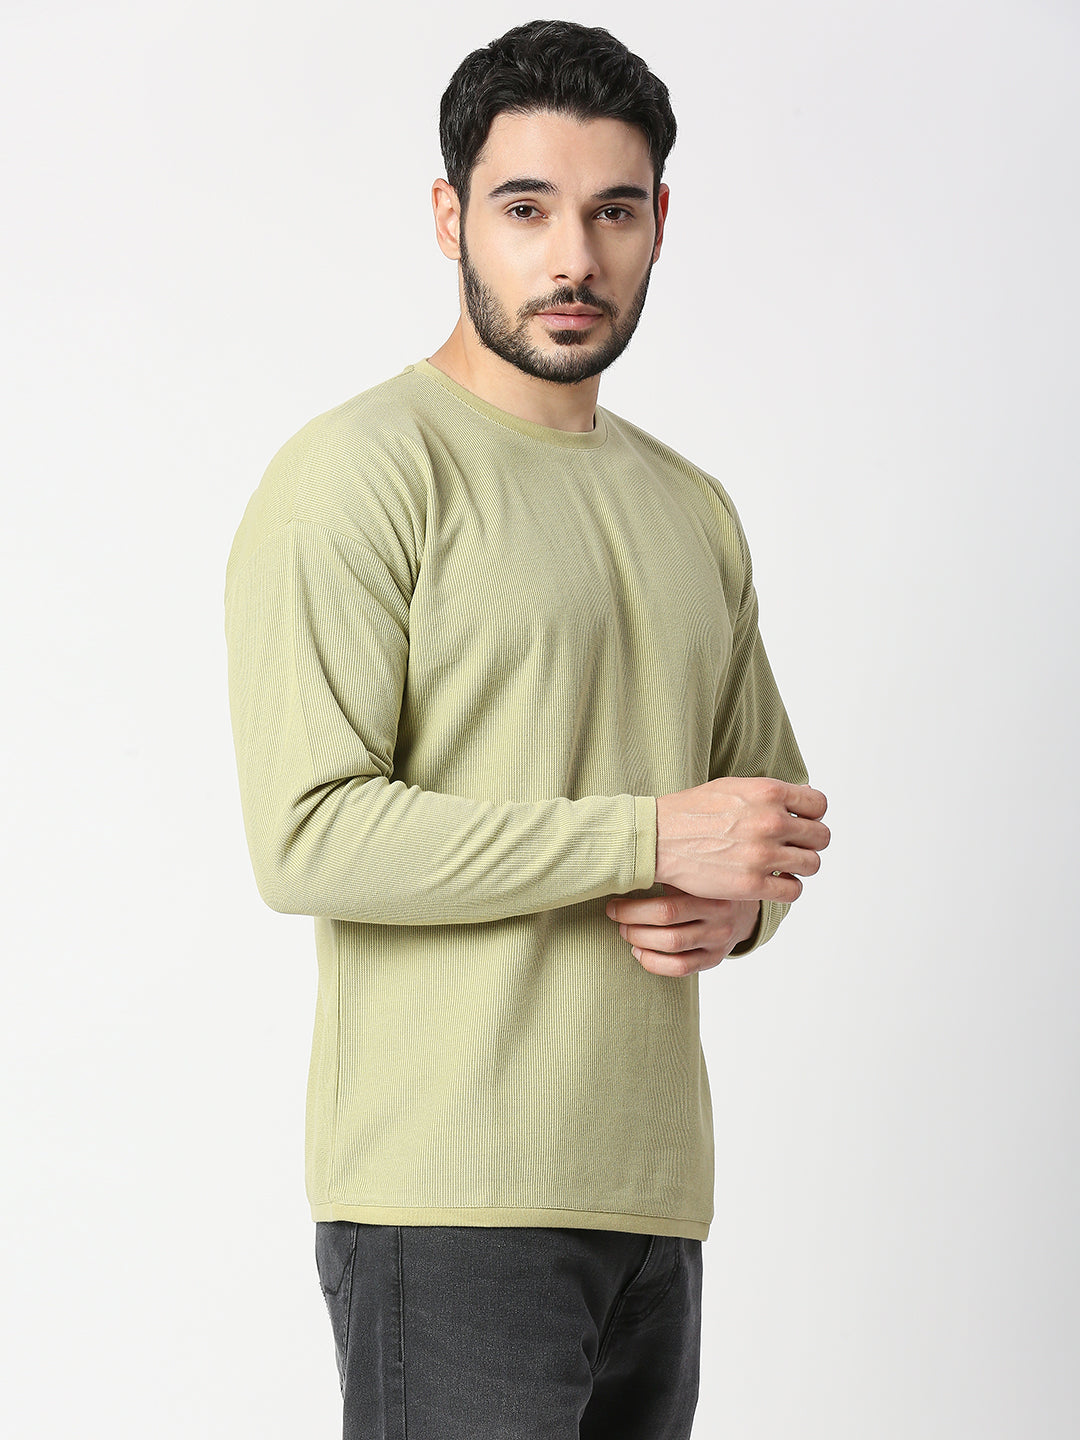 Buy Blamblack Full Sleeves Olive Green T-shirt